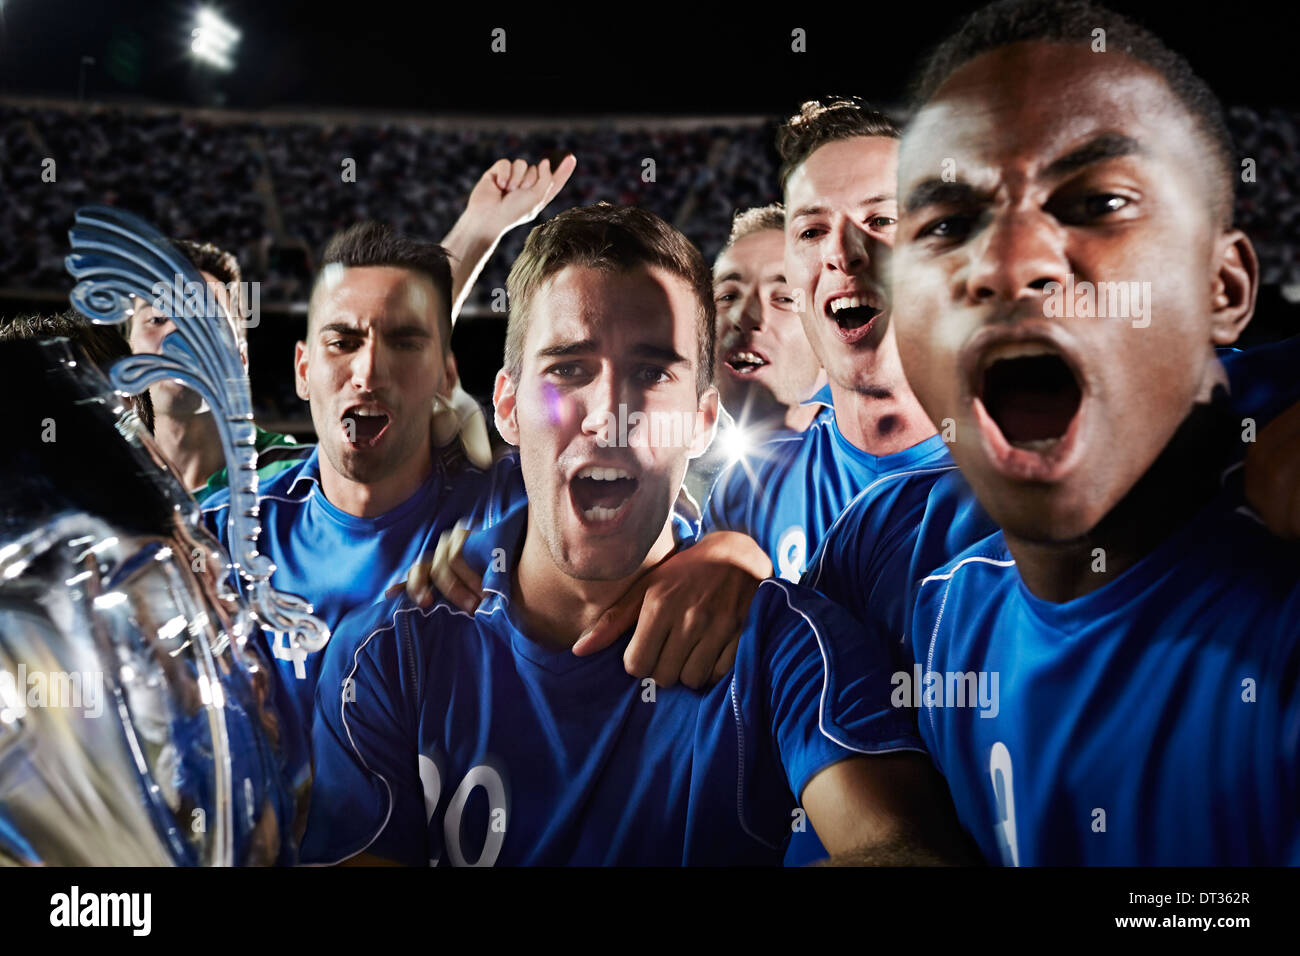 Soccer team cheering on field Stock Photo